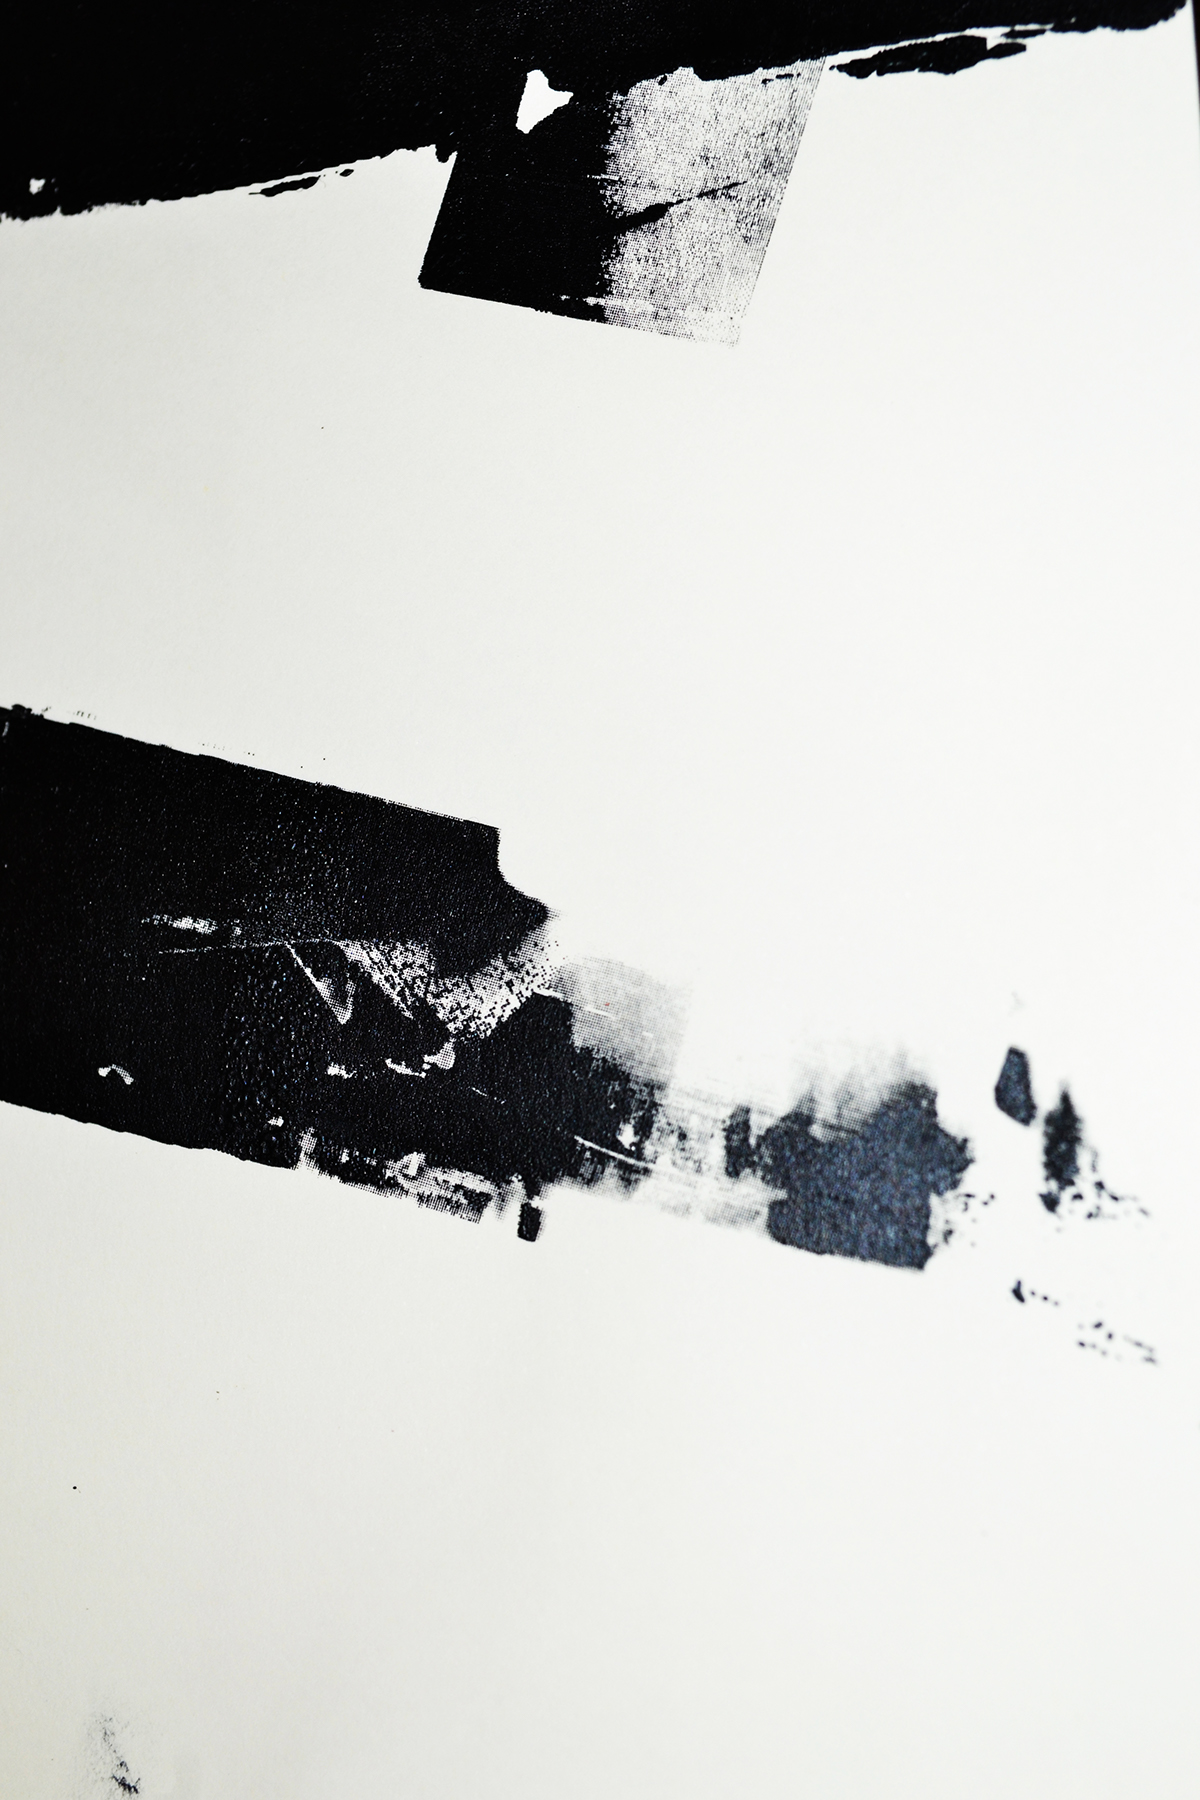 screenprint sketchbook Exhibition  texture abstract pink black print printmaking